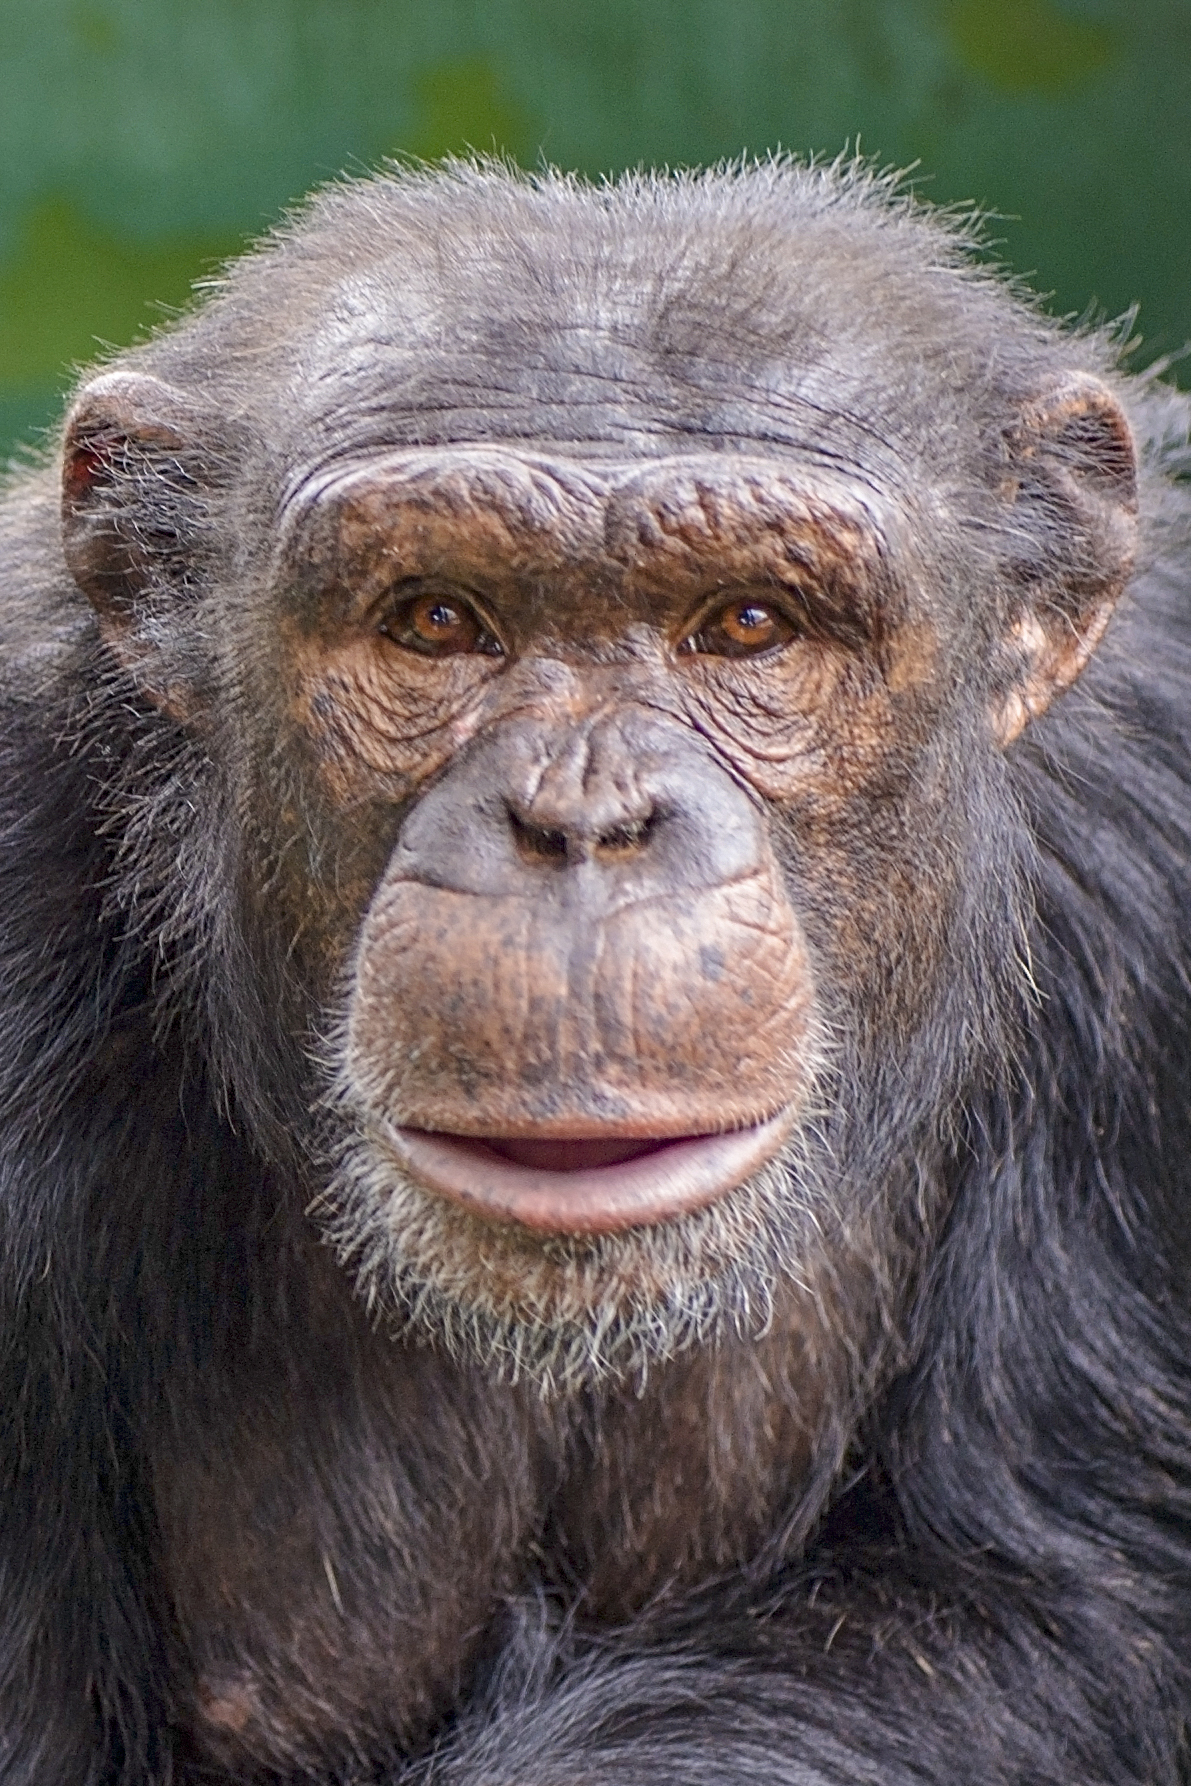 chimpanzee face side view